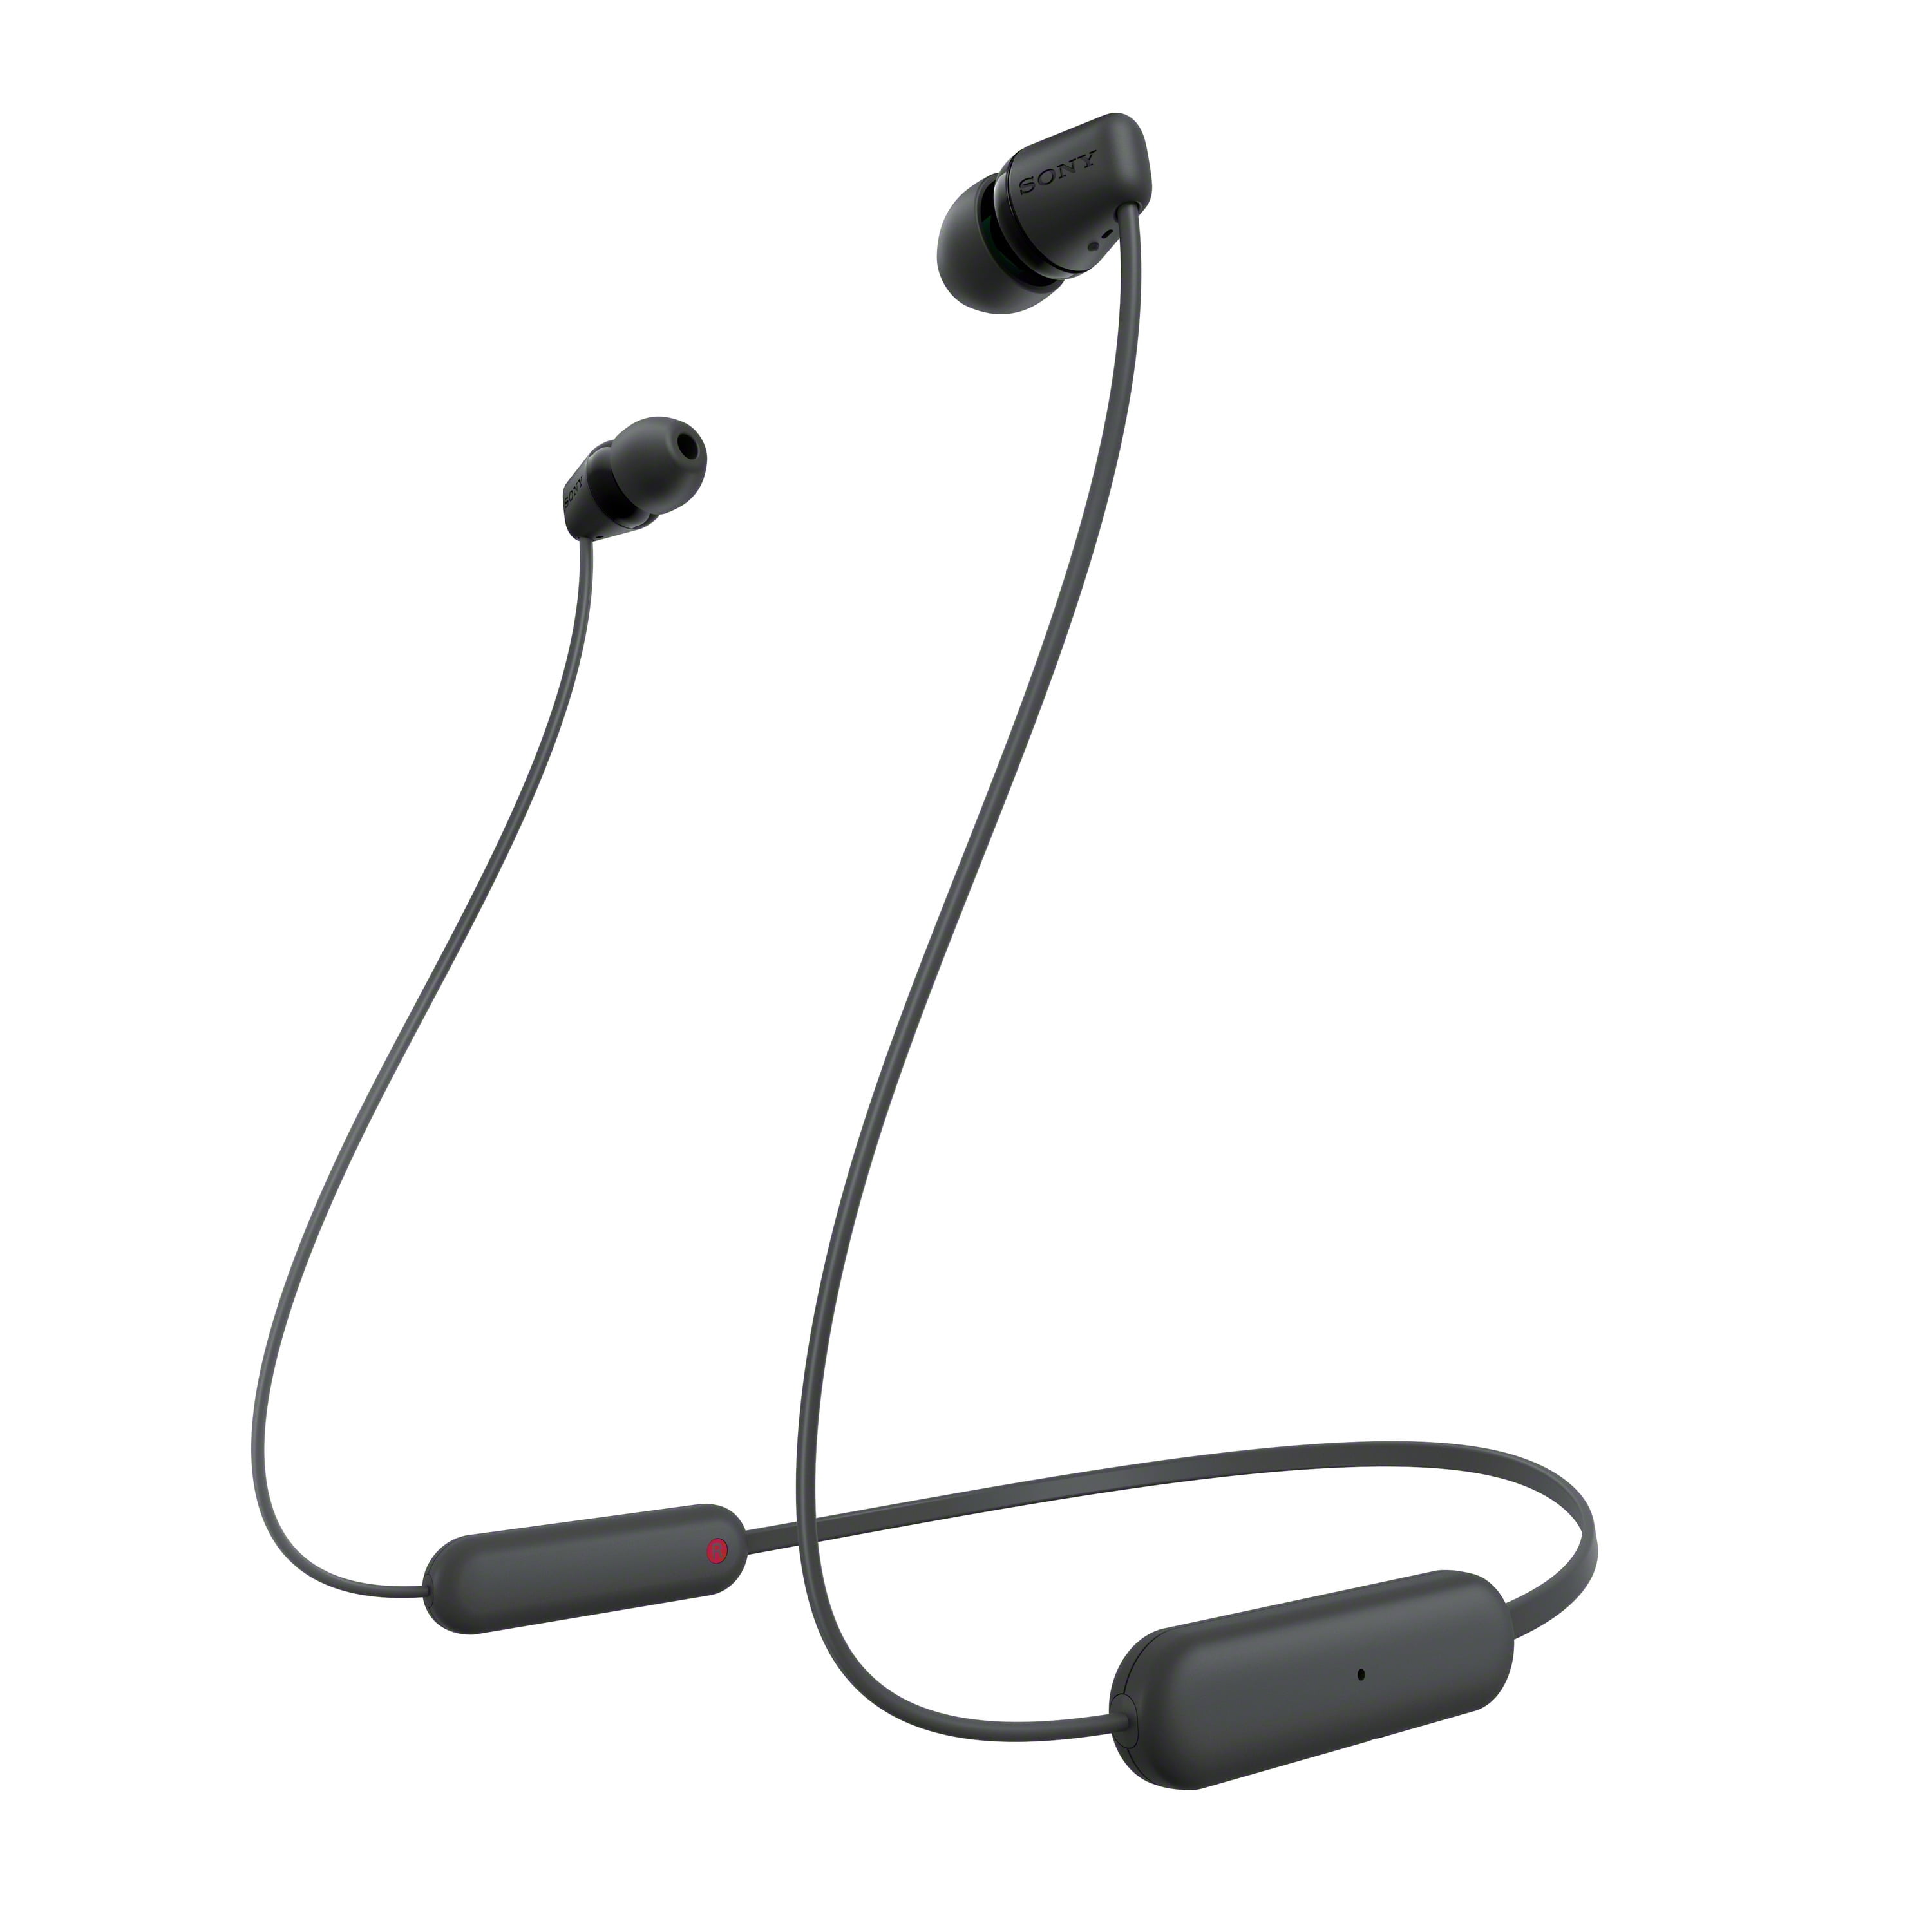 Sony Headphones Connect App for Bluetooth Headphones